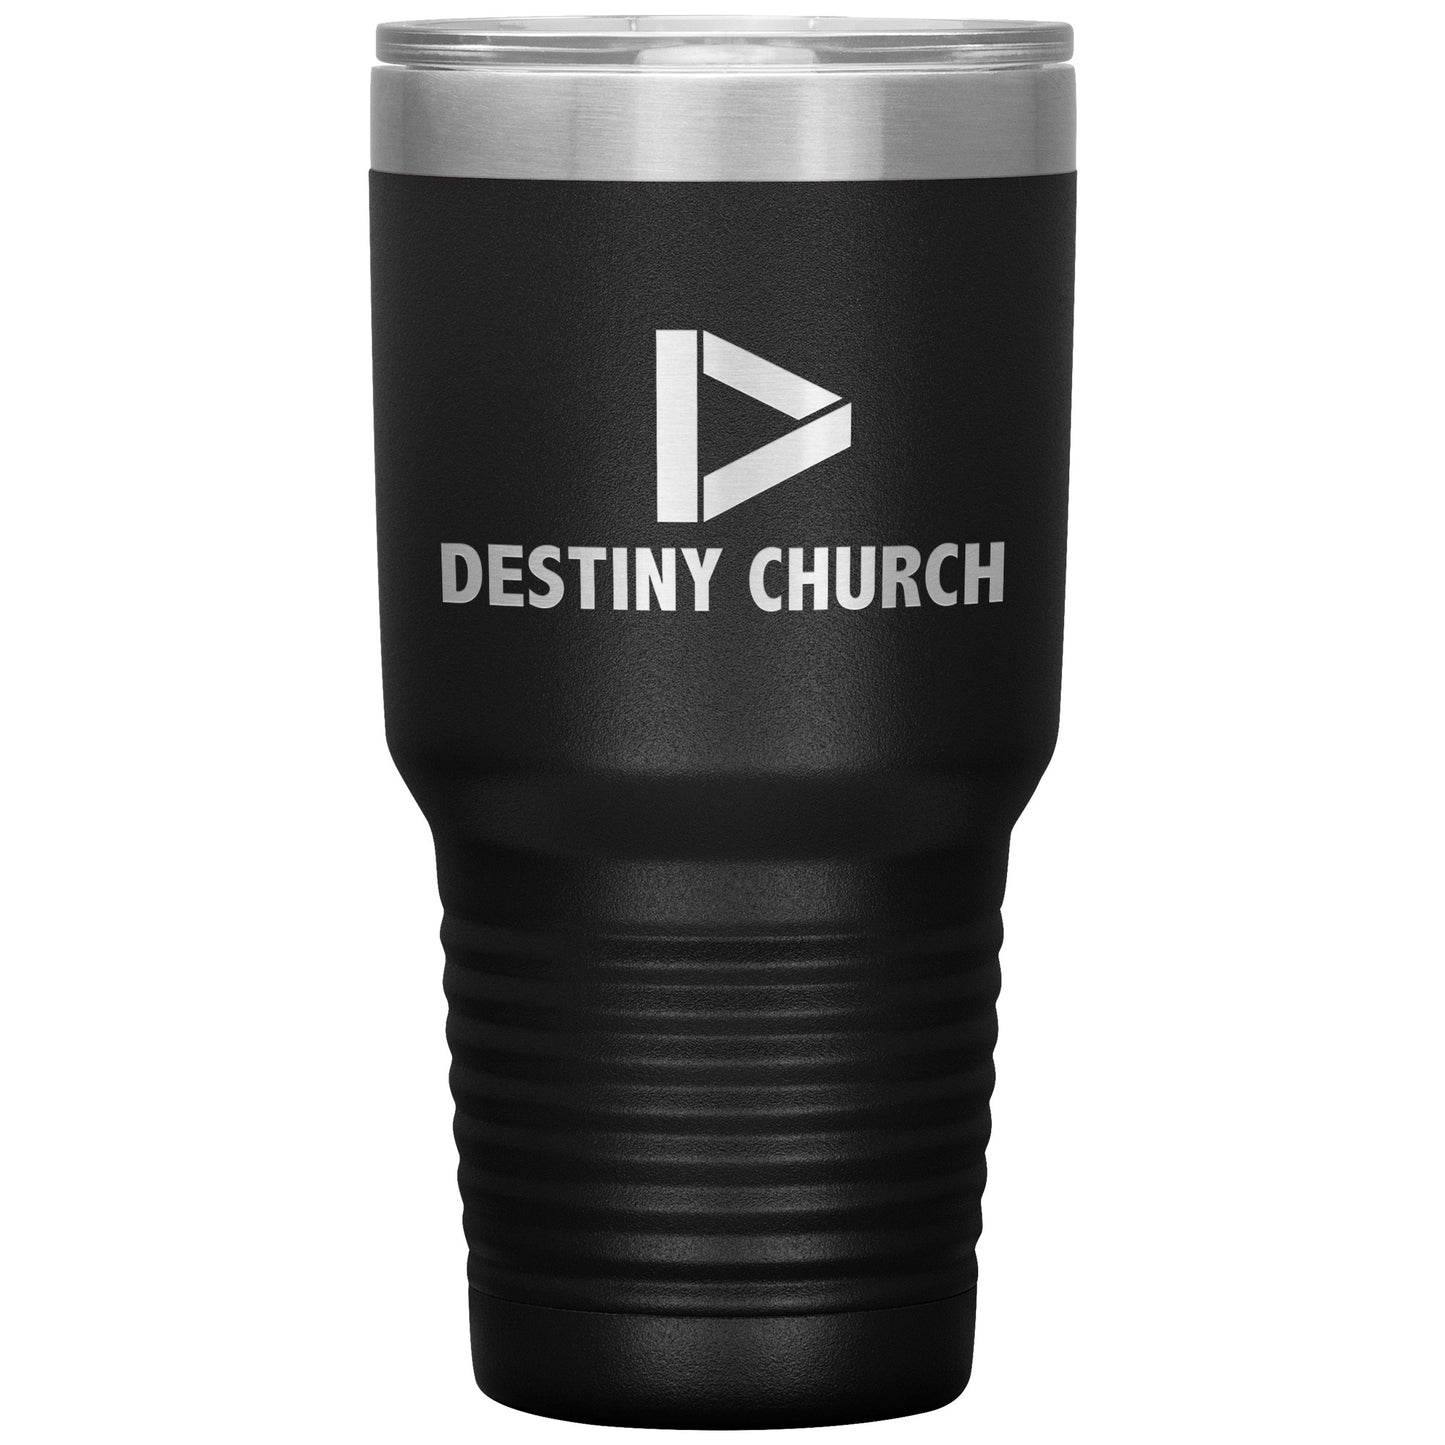 Destiny Church - Insulated Tumblers